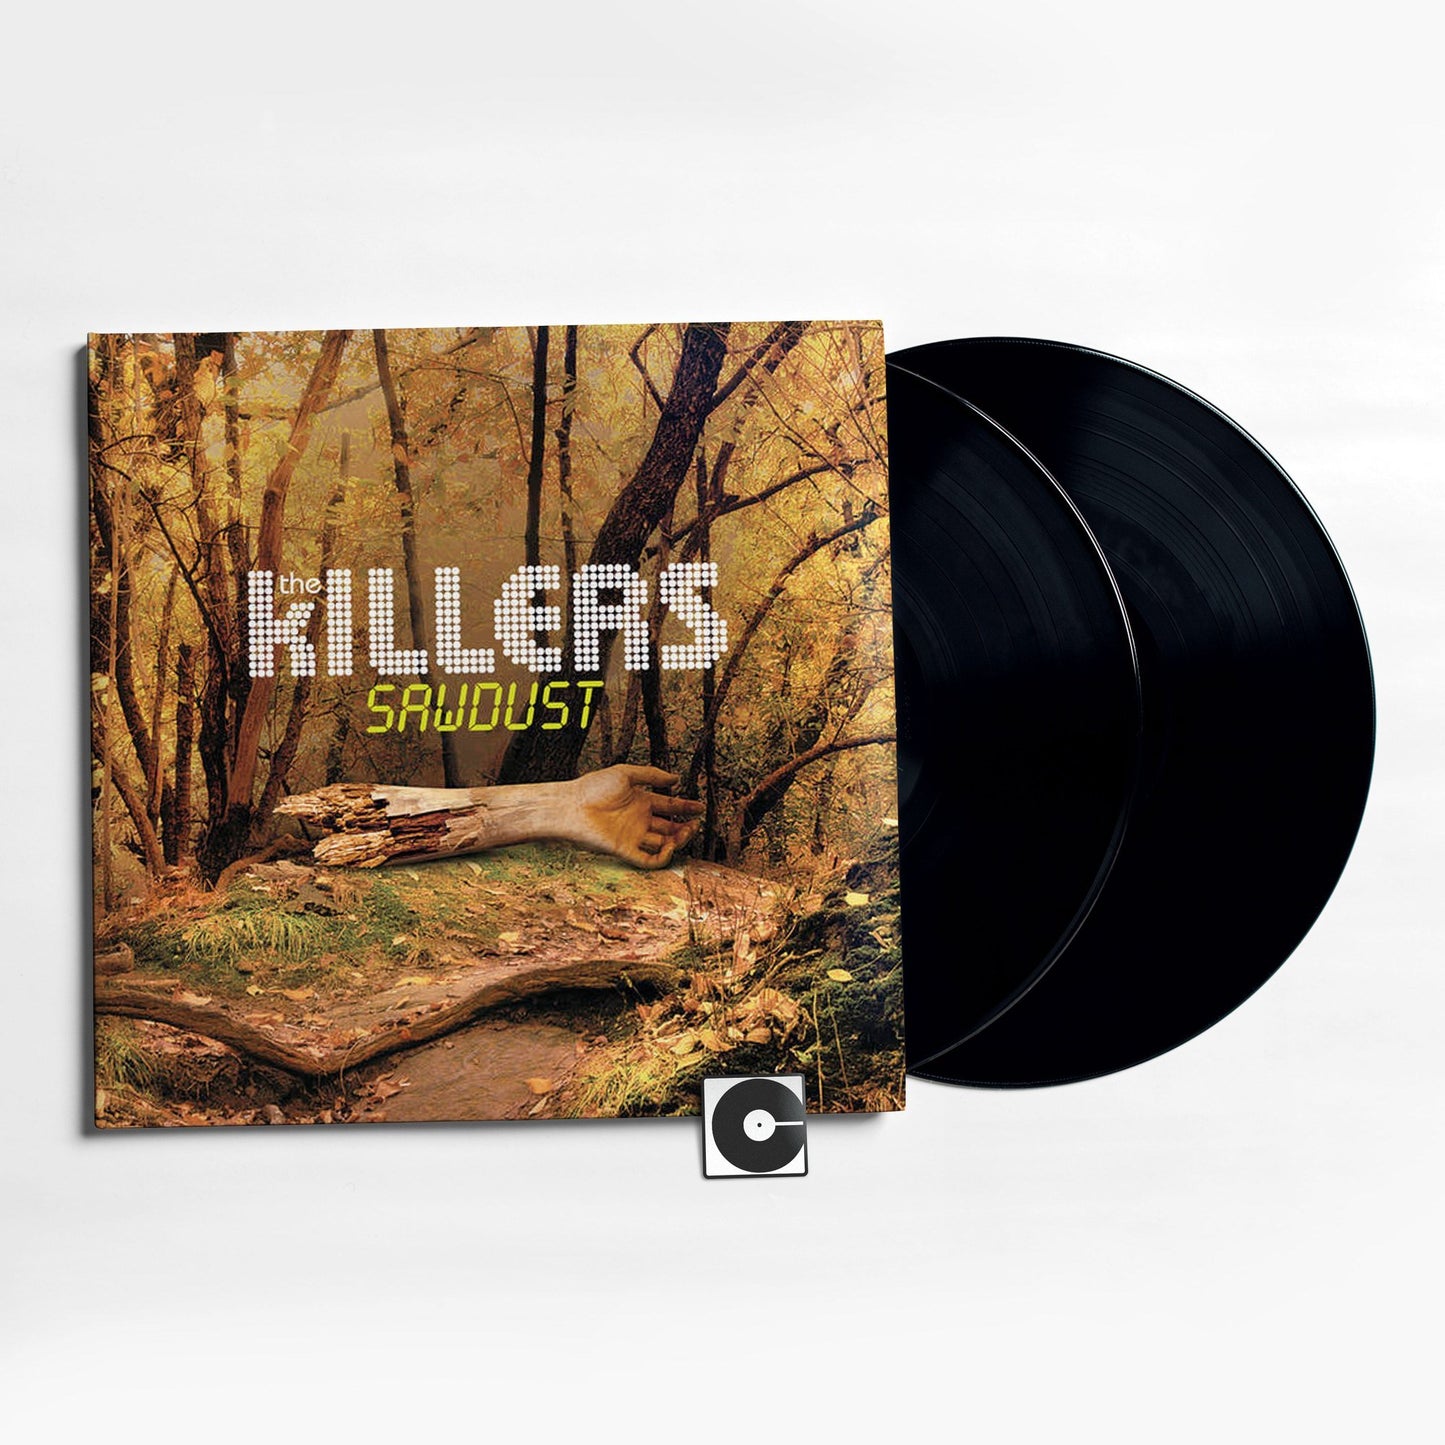 The Killers - "Sawdust"